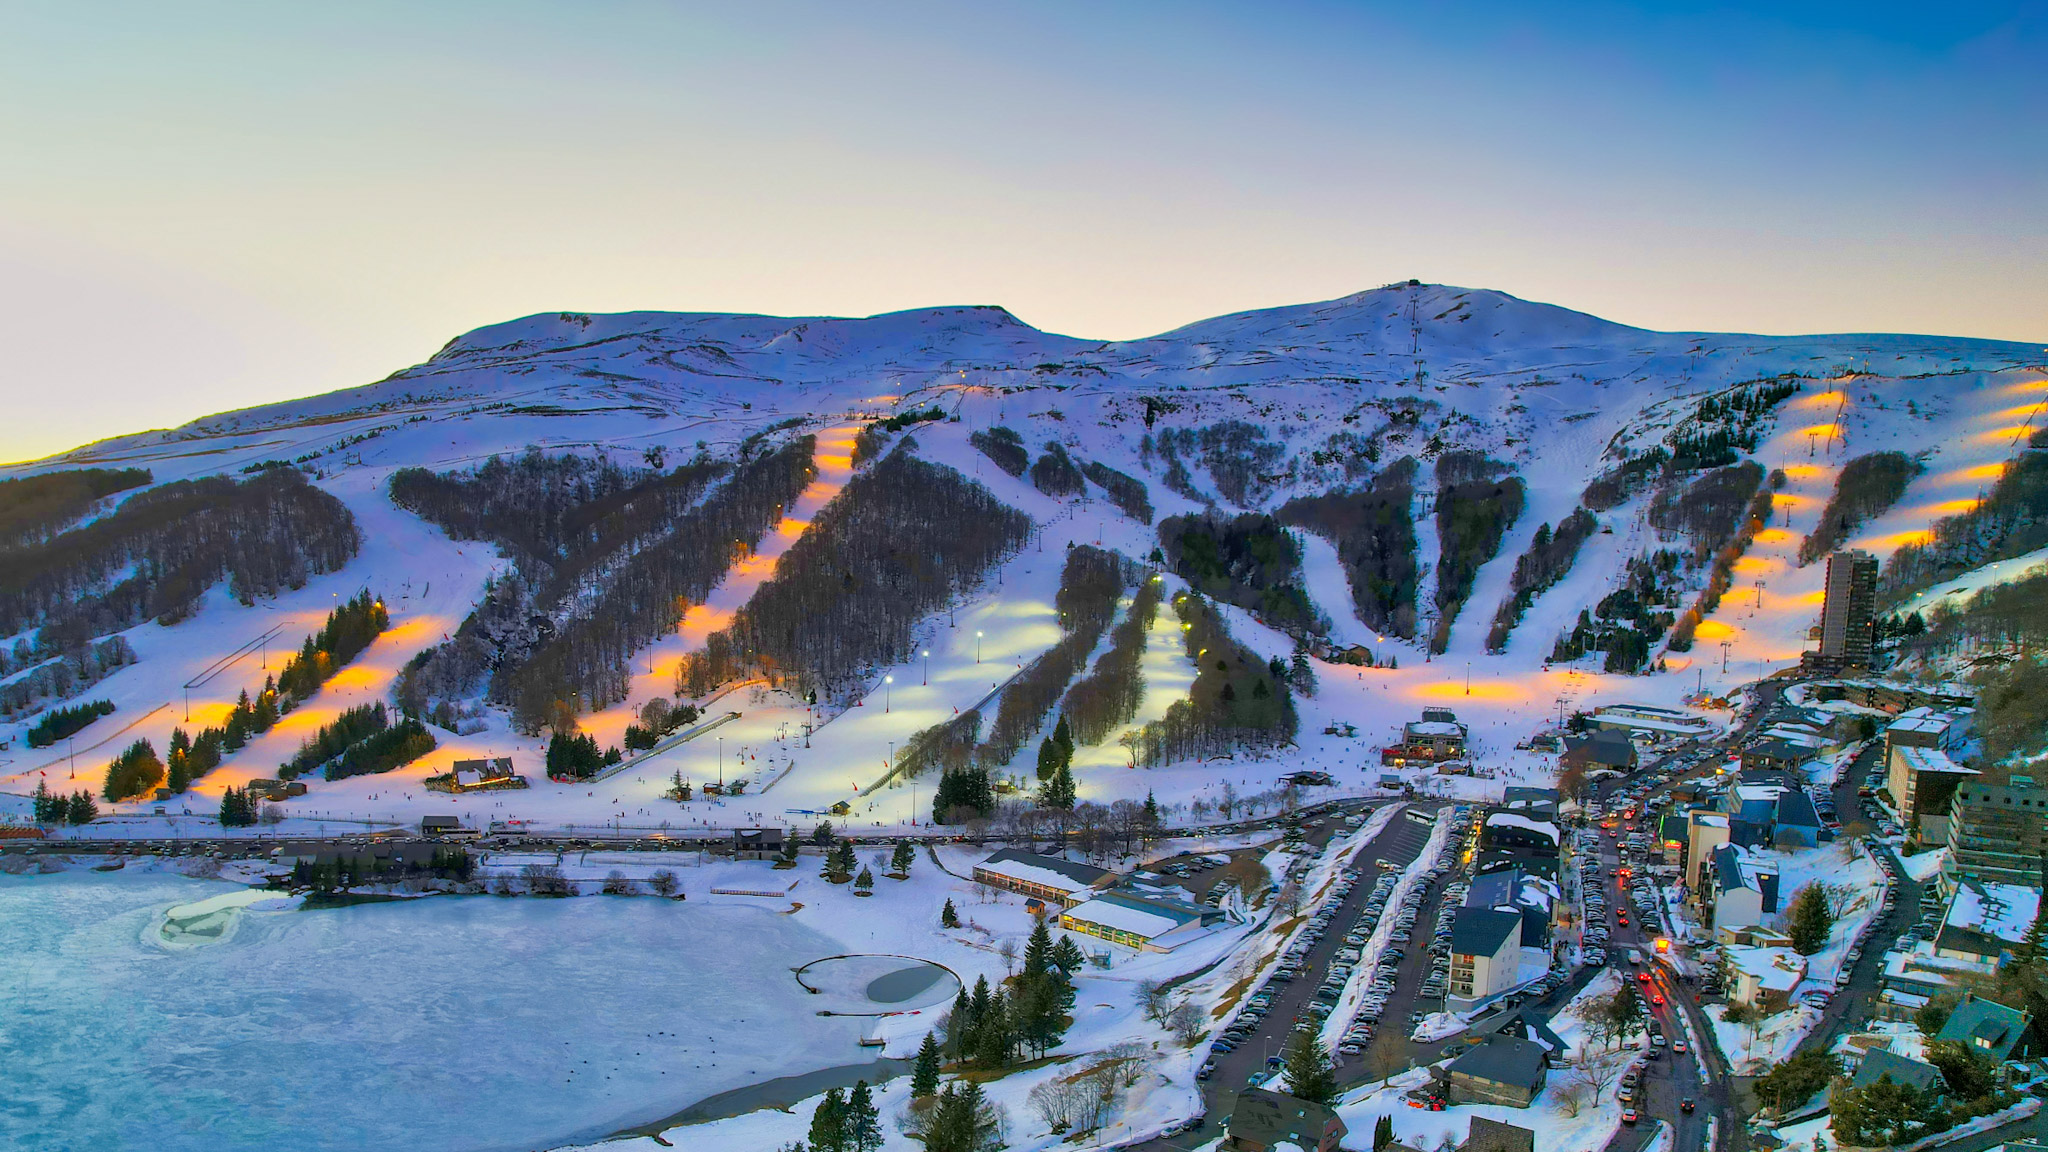 Sunset on the slopes of the ski resort of Super Besse